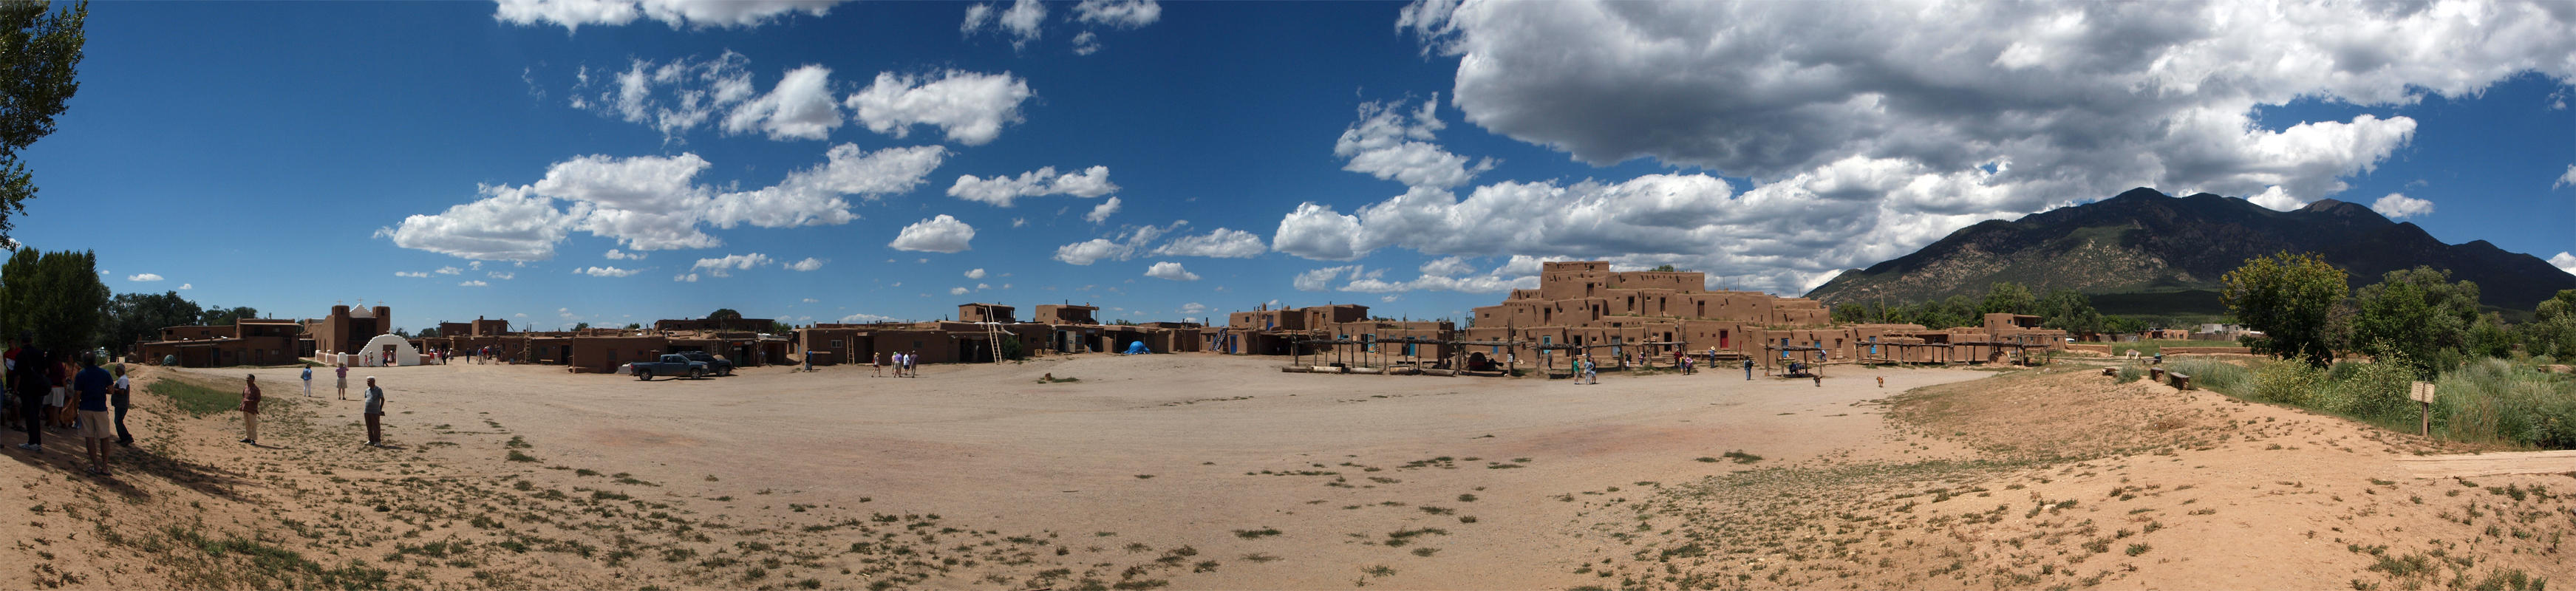 Panorama - One side of Taos Pueblo